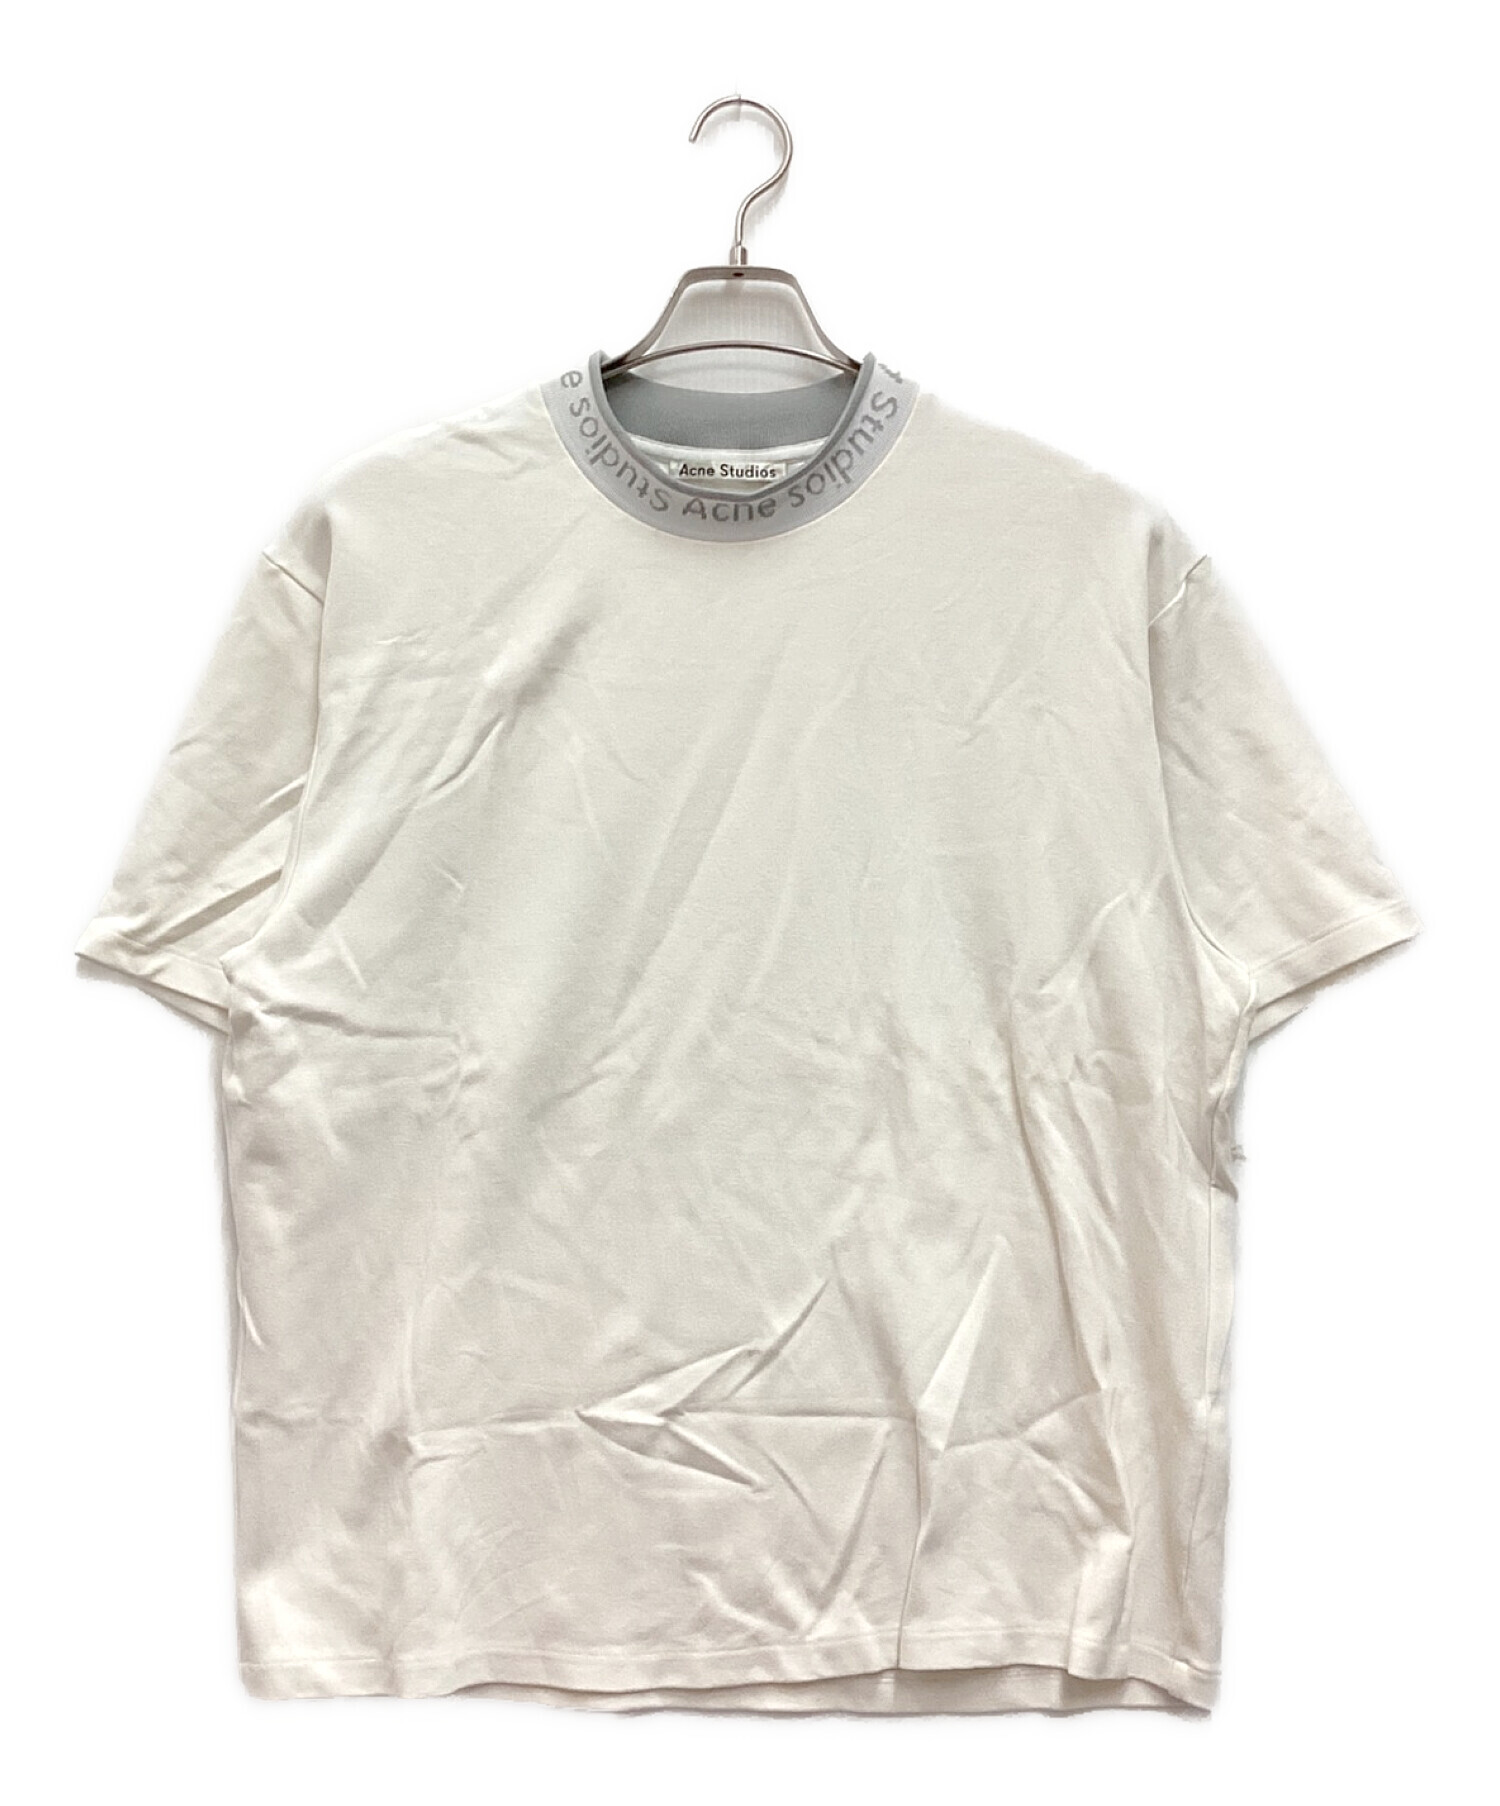 ACNE STUDIOS (アクネストゥディオス) EXTORR LOGO T-SHIRT / エクストールロゴTシャツ ホワイト サイズ:M